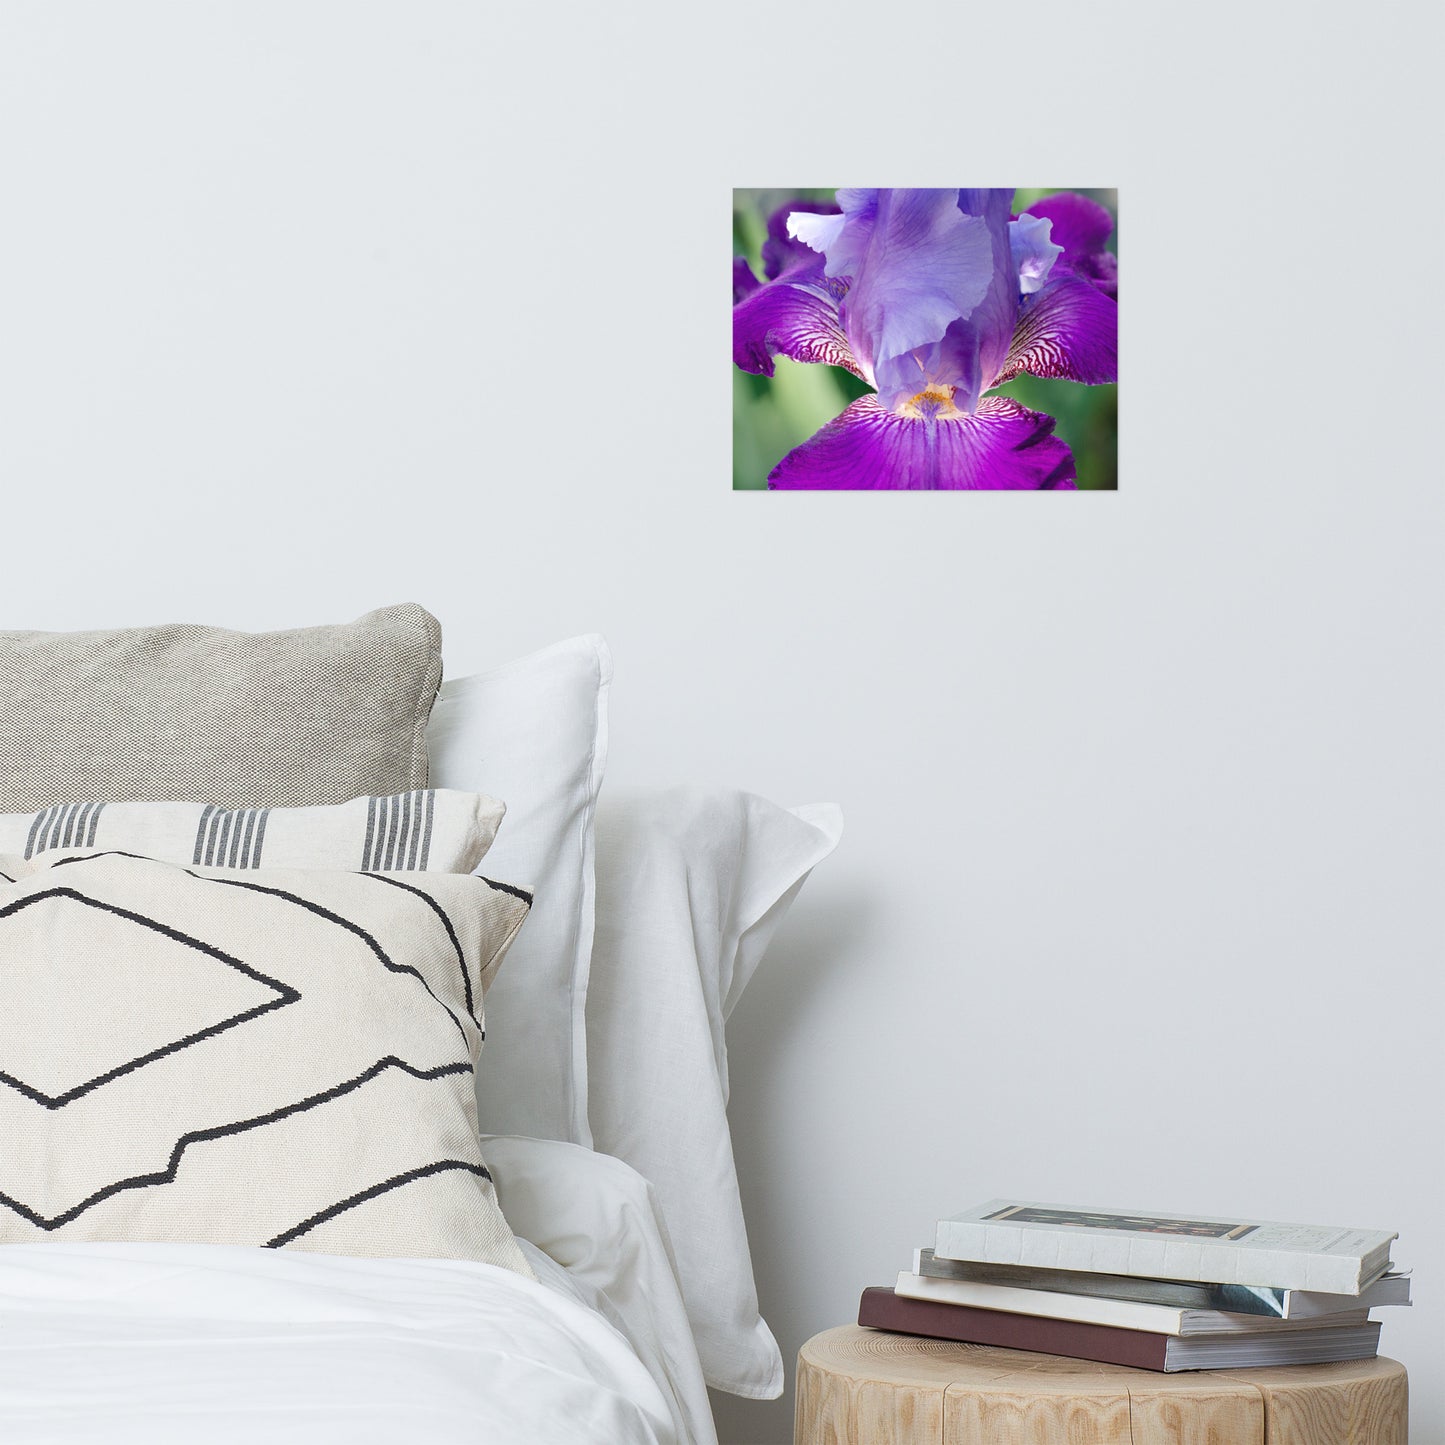 Bedroom Posters Amazon: Glowing Iris - Botanical / Floral / Flora / Flowers / Nature Photograph - Loose / Frameable / Unframed / Frameless Wall Art Print - Artwork